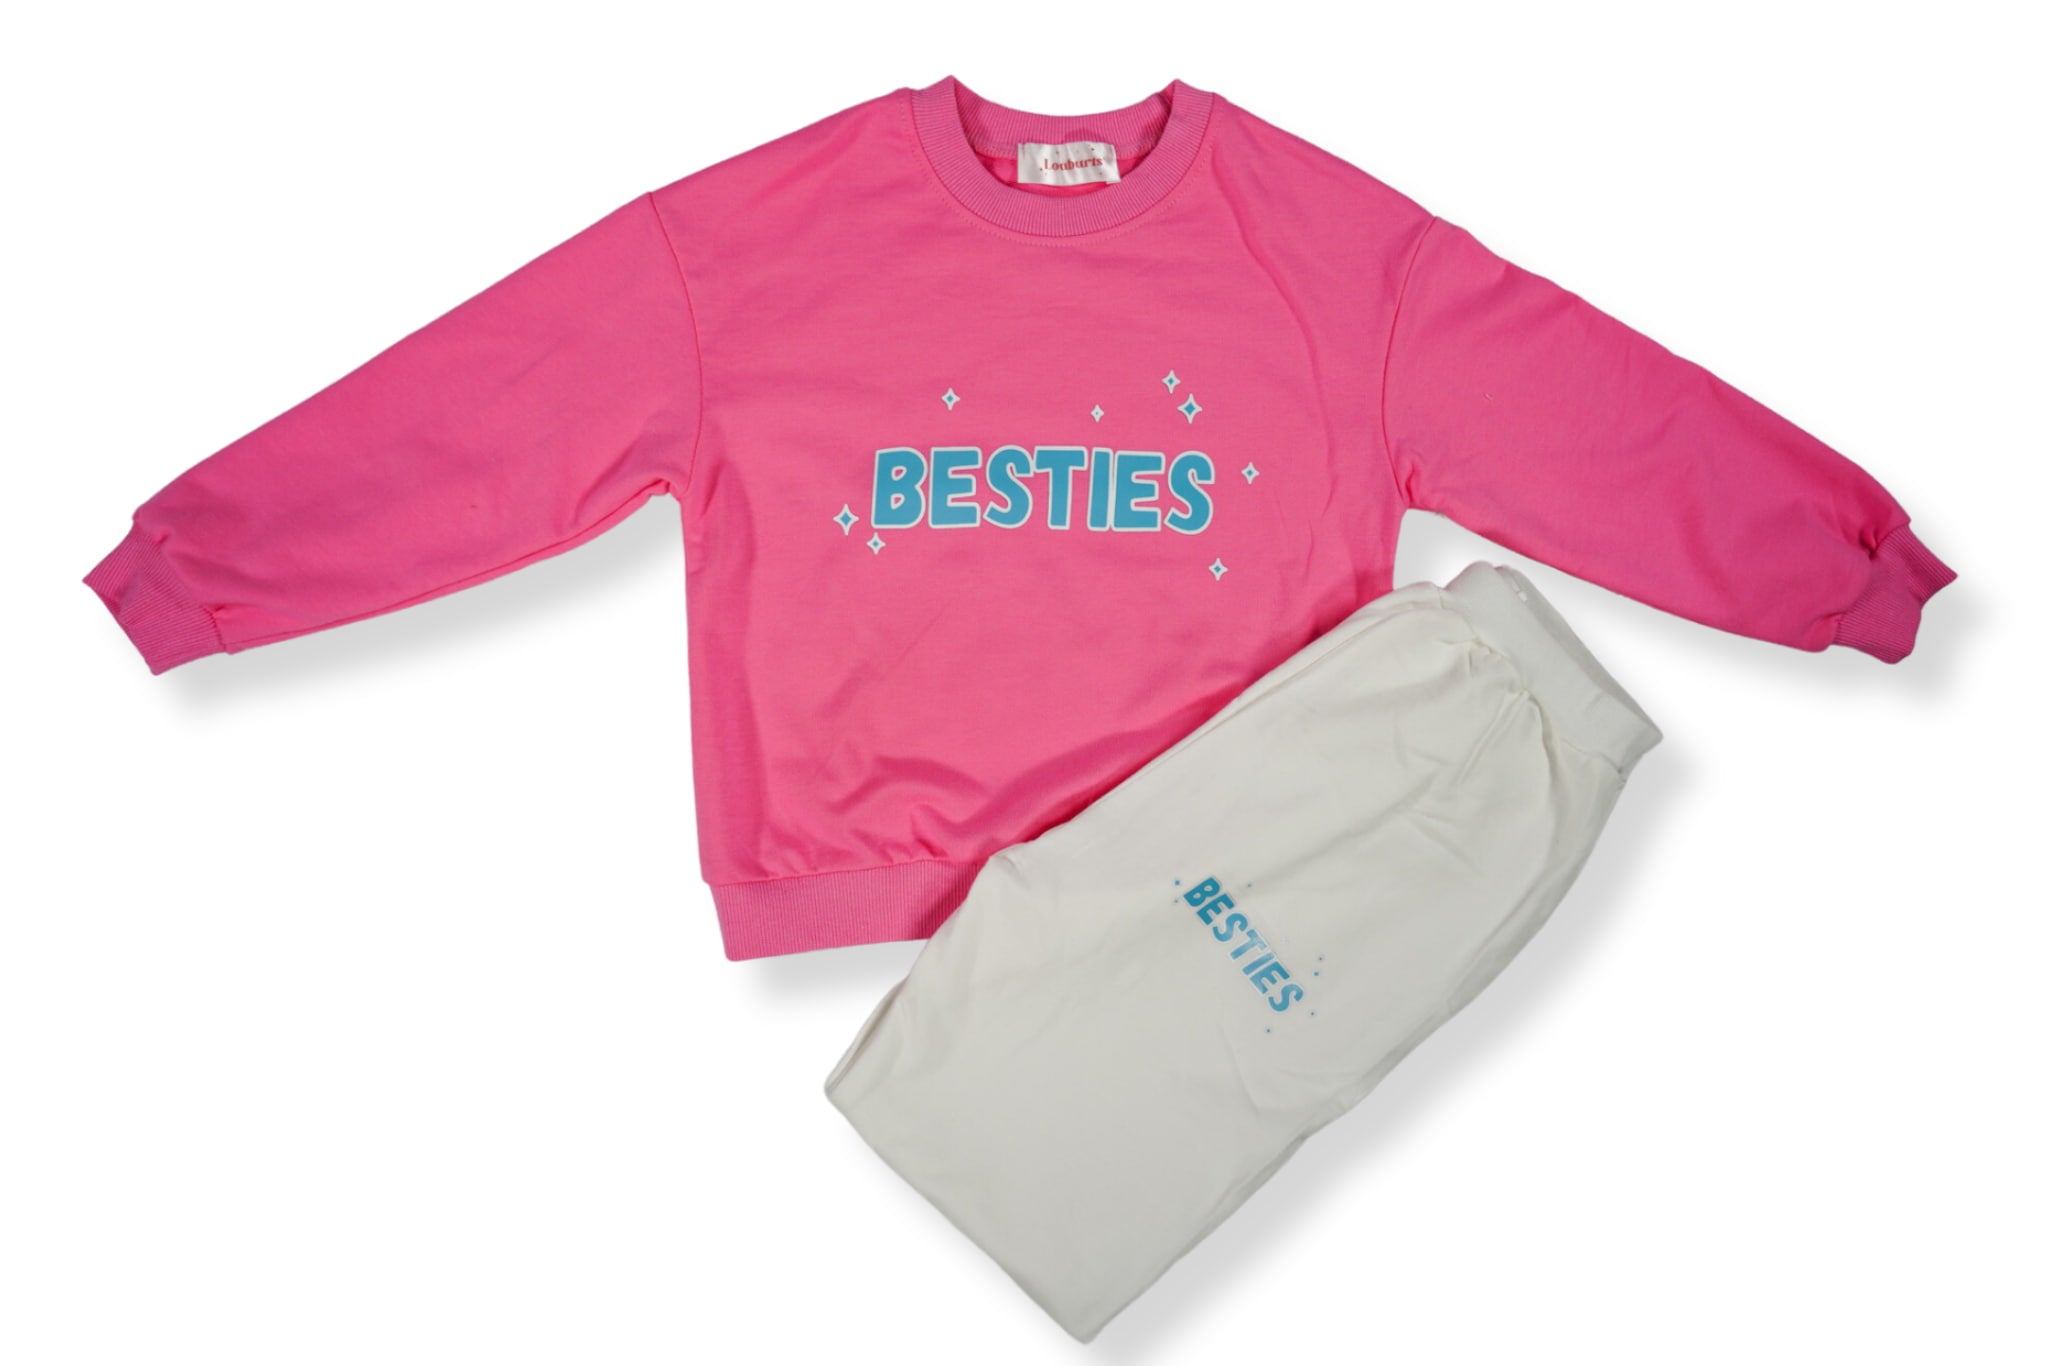 Besties sweatshirt with pants